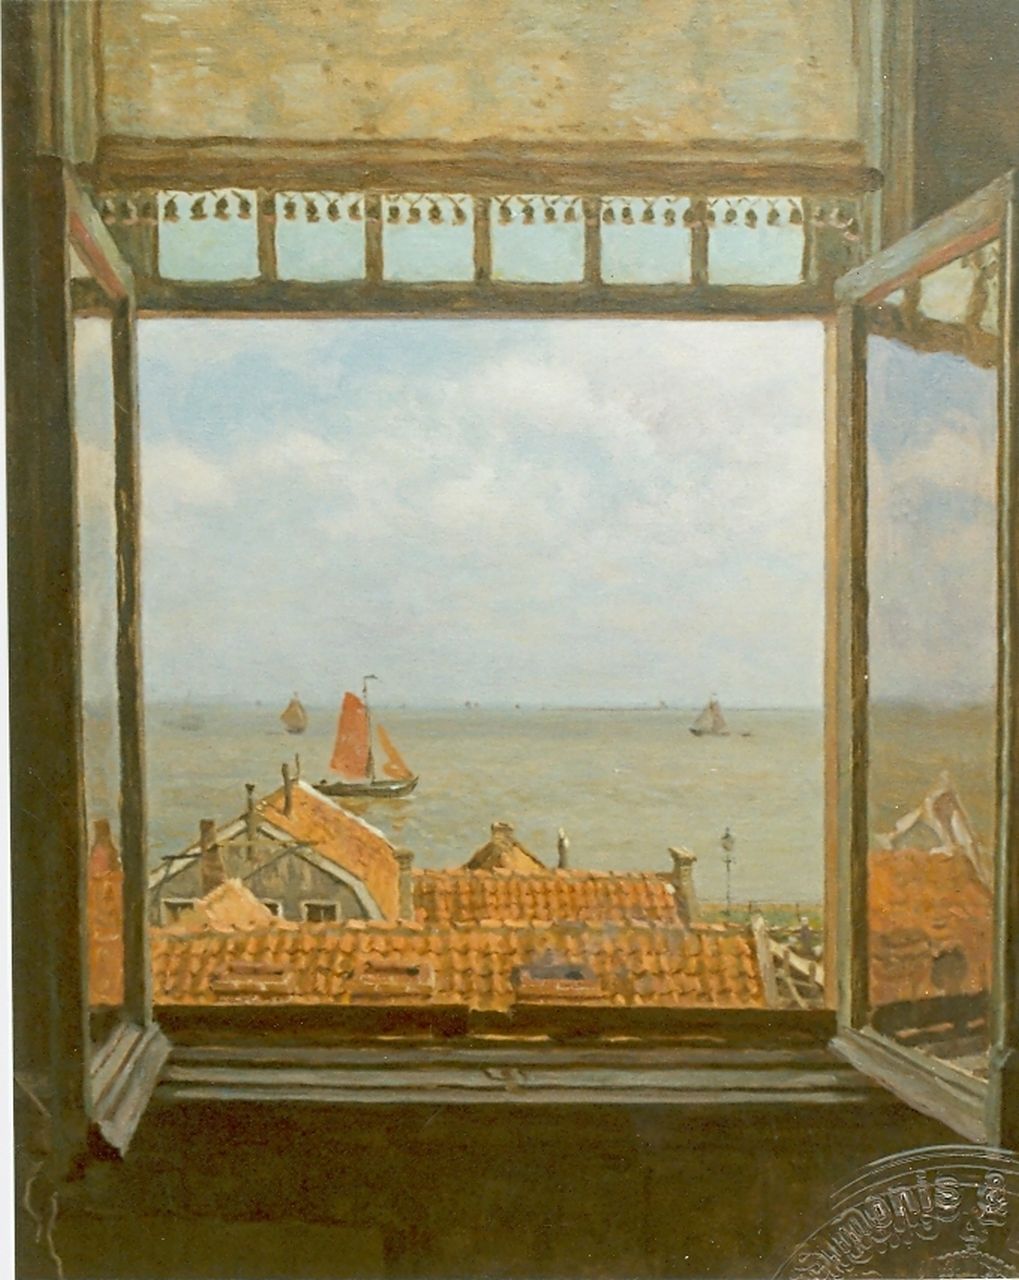 Tholen W.B.  | Willem Bastiaan Tholen, View of the Zuiderzee from Hotel van Diepen, Volendam, oil on canvas 70.0 x 58.5 cm, signed l.r.